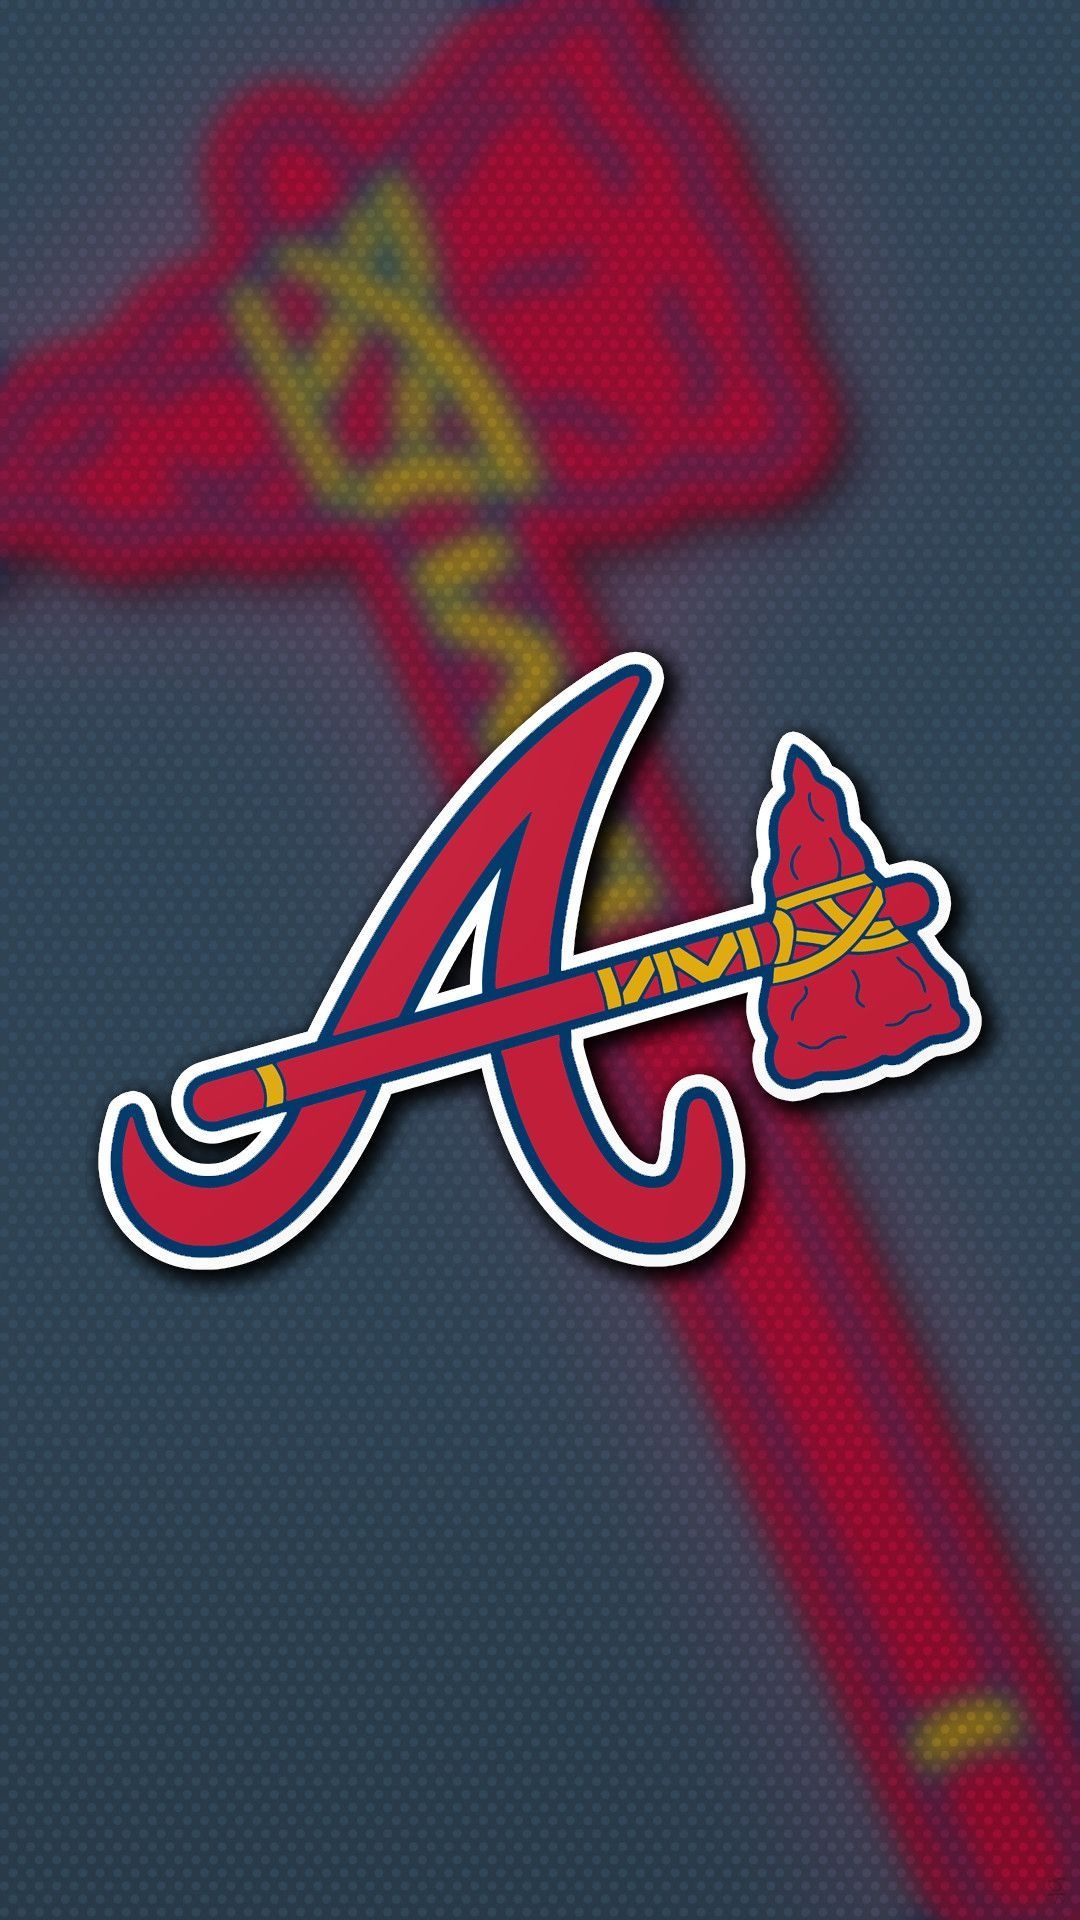 Atlanta Braves wallpaper, Baseball fandom, Team loyalty, Sports enthusiasm, 1080x1920 Full HD Handy